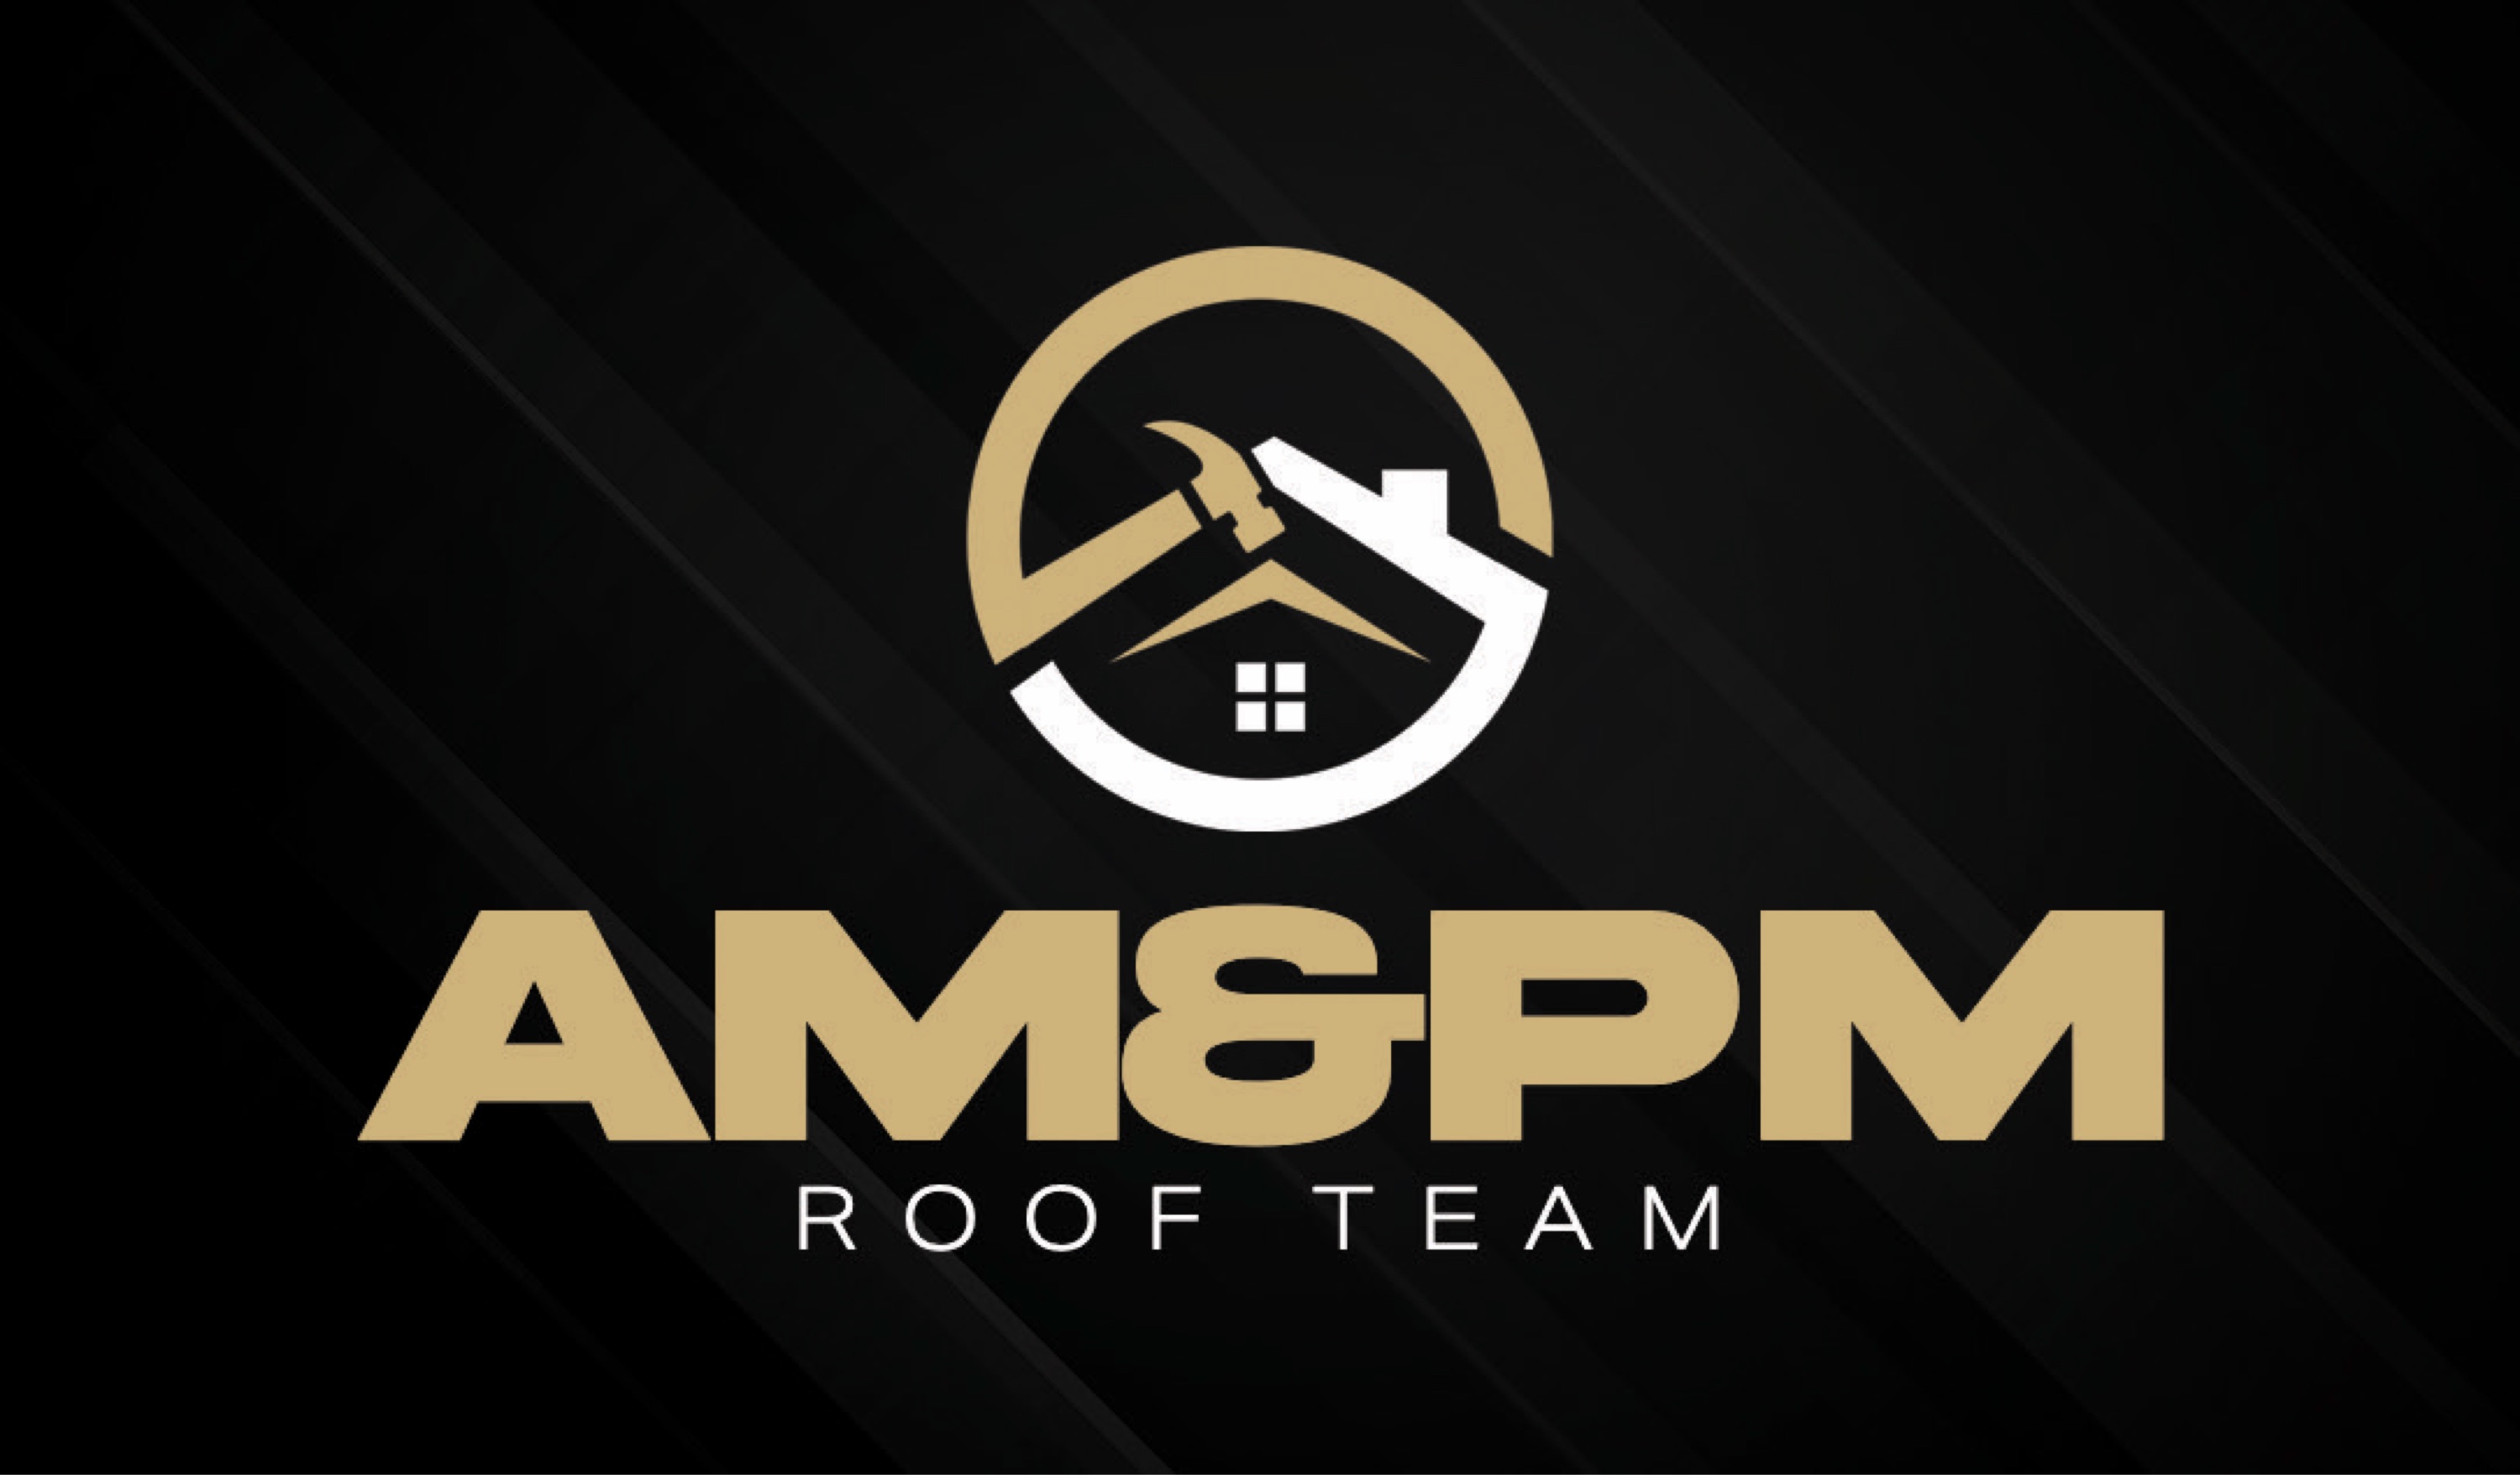 AM&PM Roof Team Logo